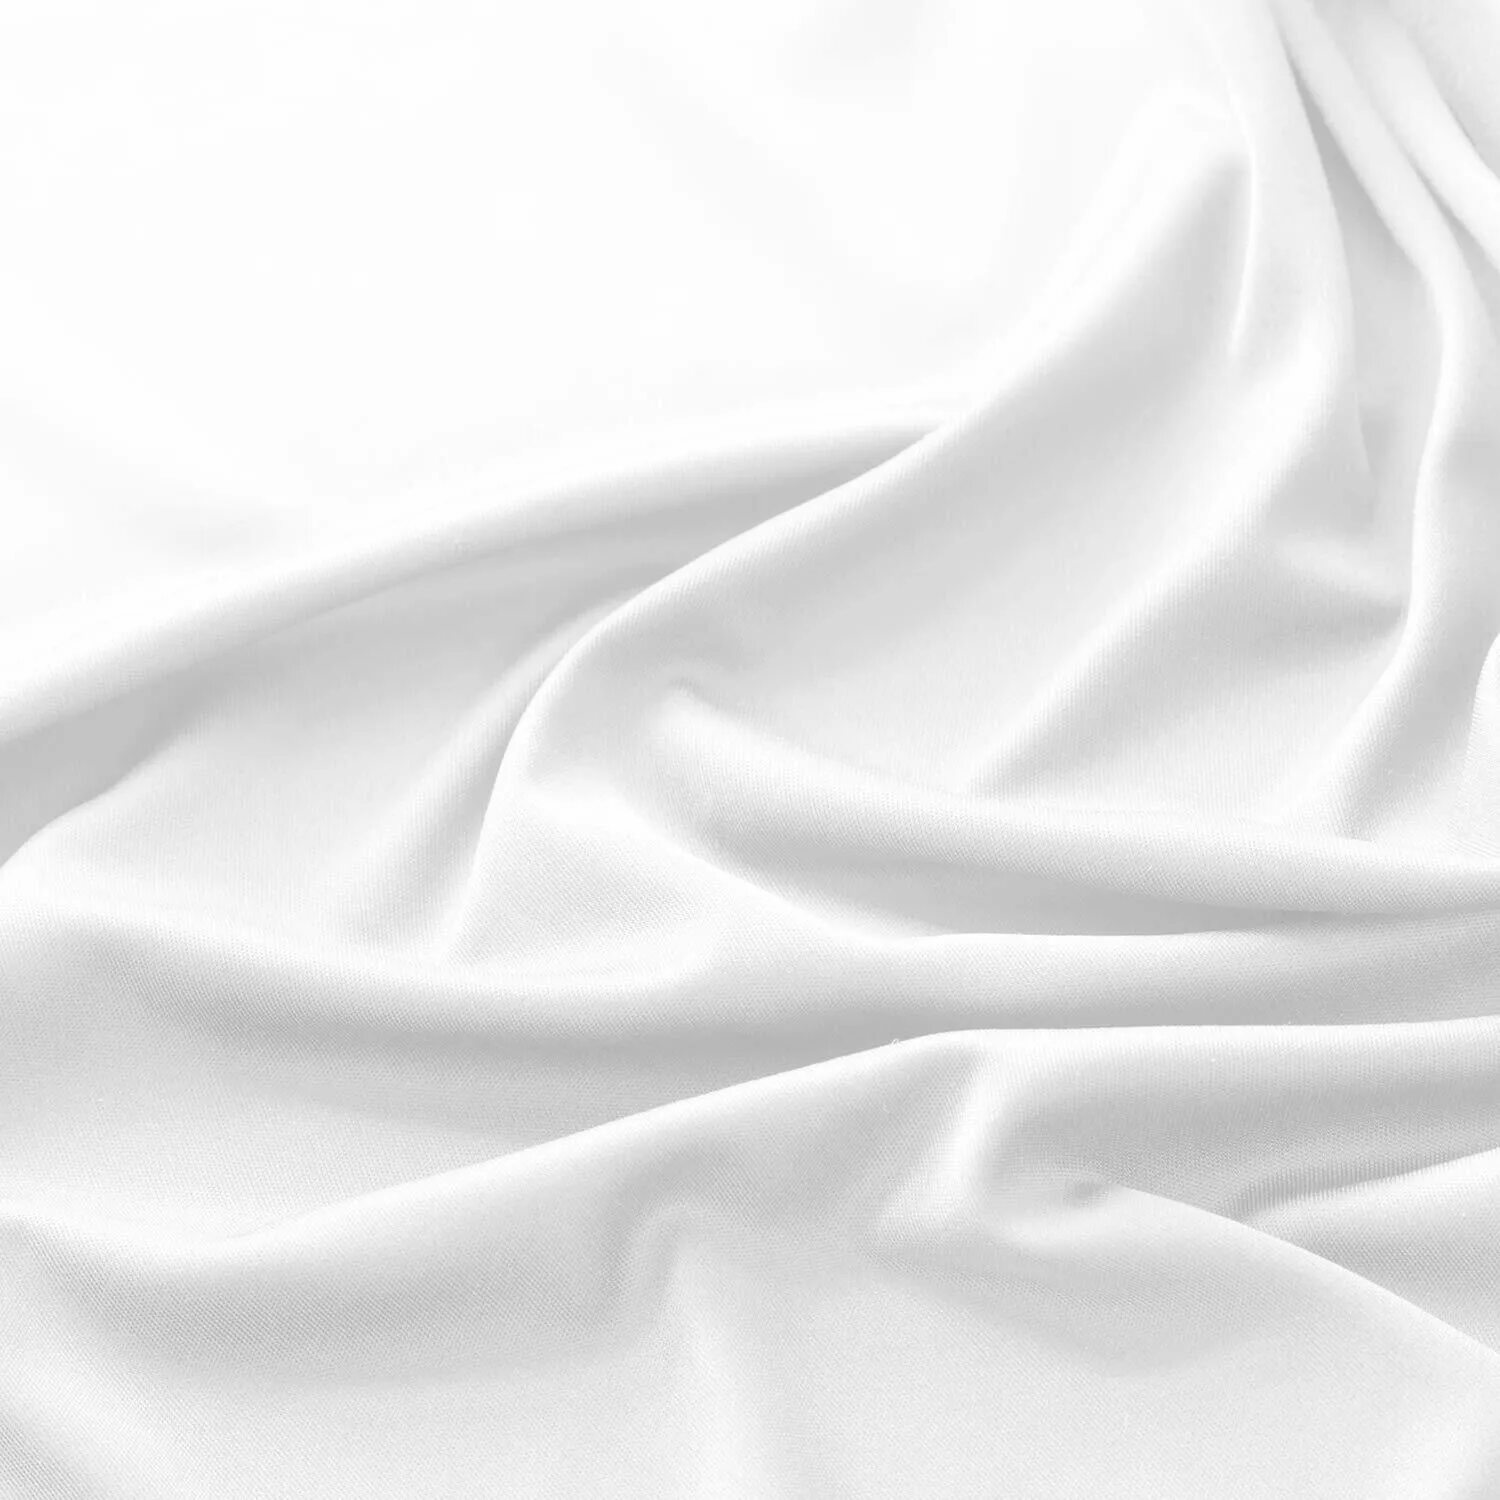 Белая ткань. Белая ткань фон. Белый атлас. Белая ткань складки. Идеально белый цвет